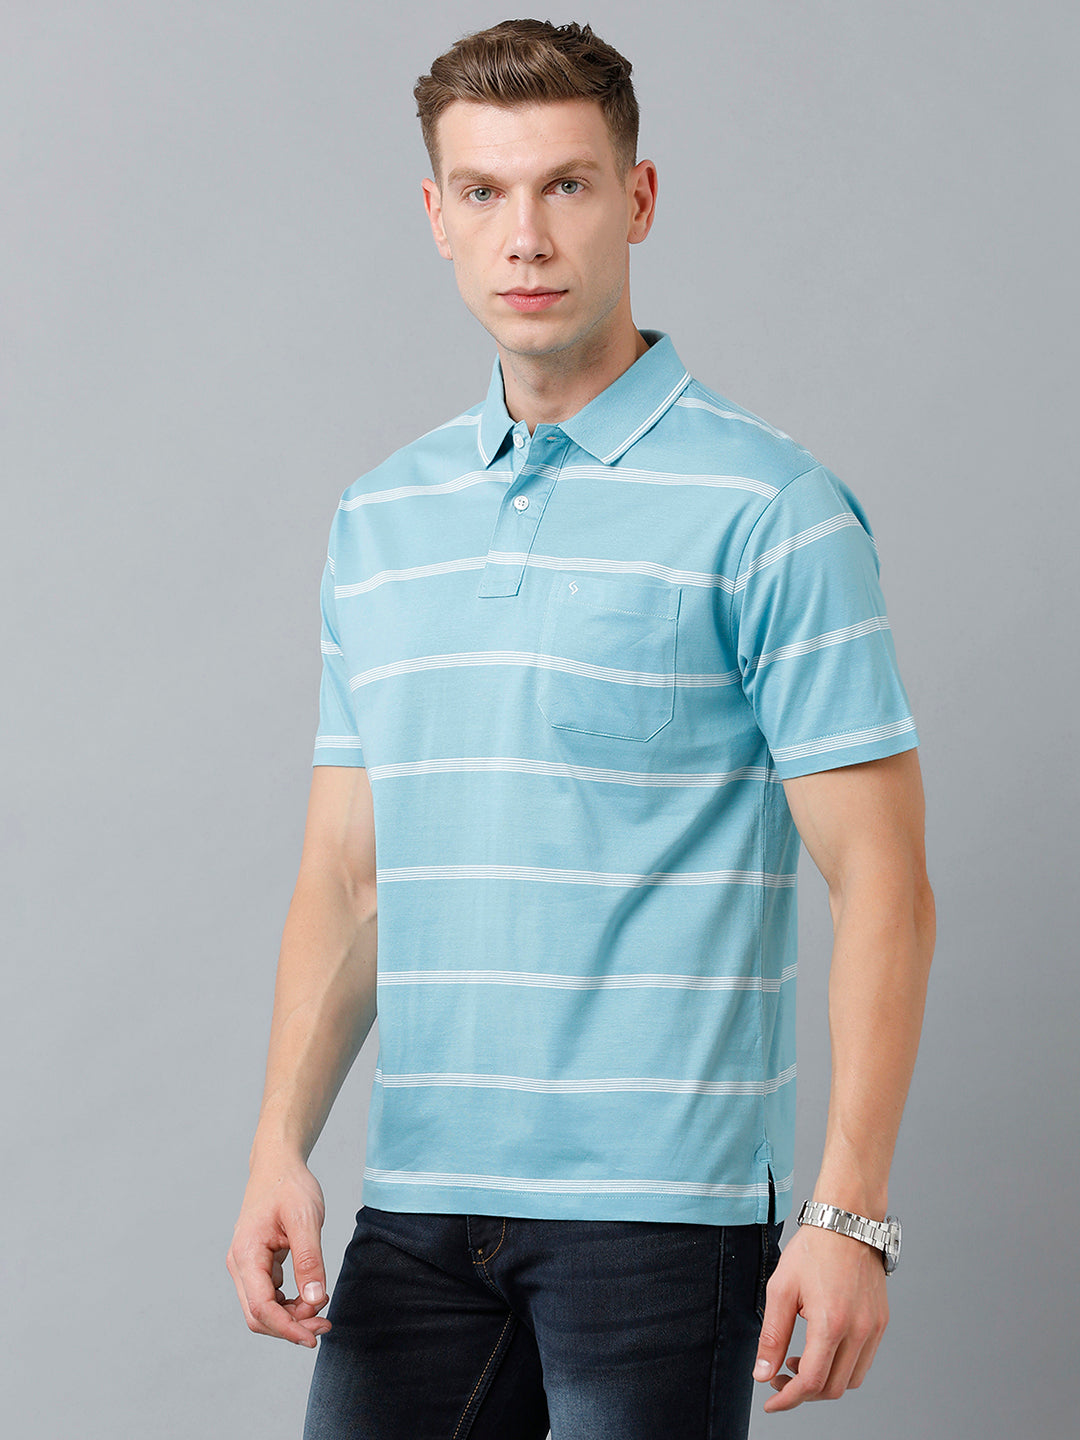 Classic Polo Men's Cotton Half Sleeve Striped Authentic Fit Polo Neck Blue Color T-Shirt | Ap - 83 B